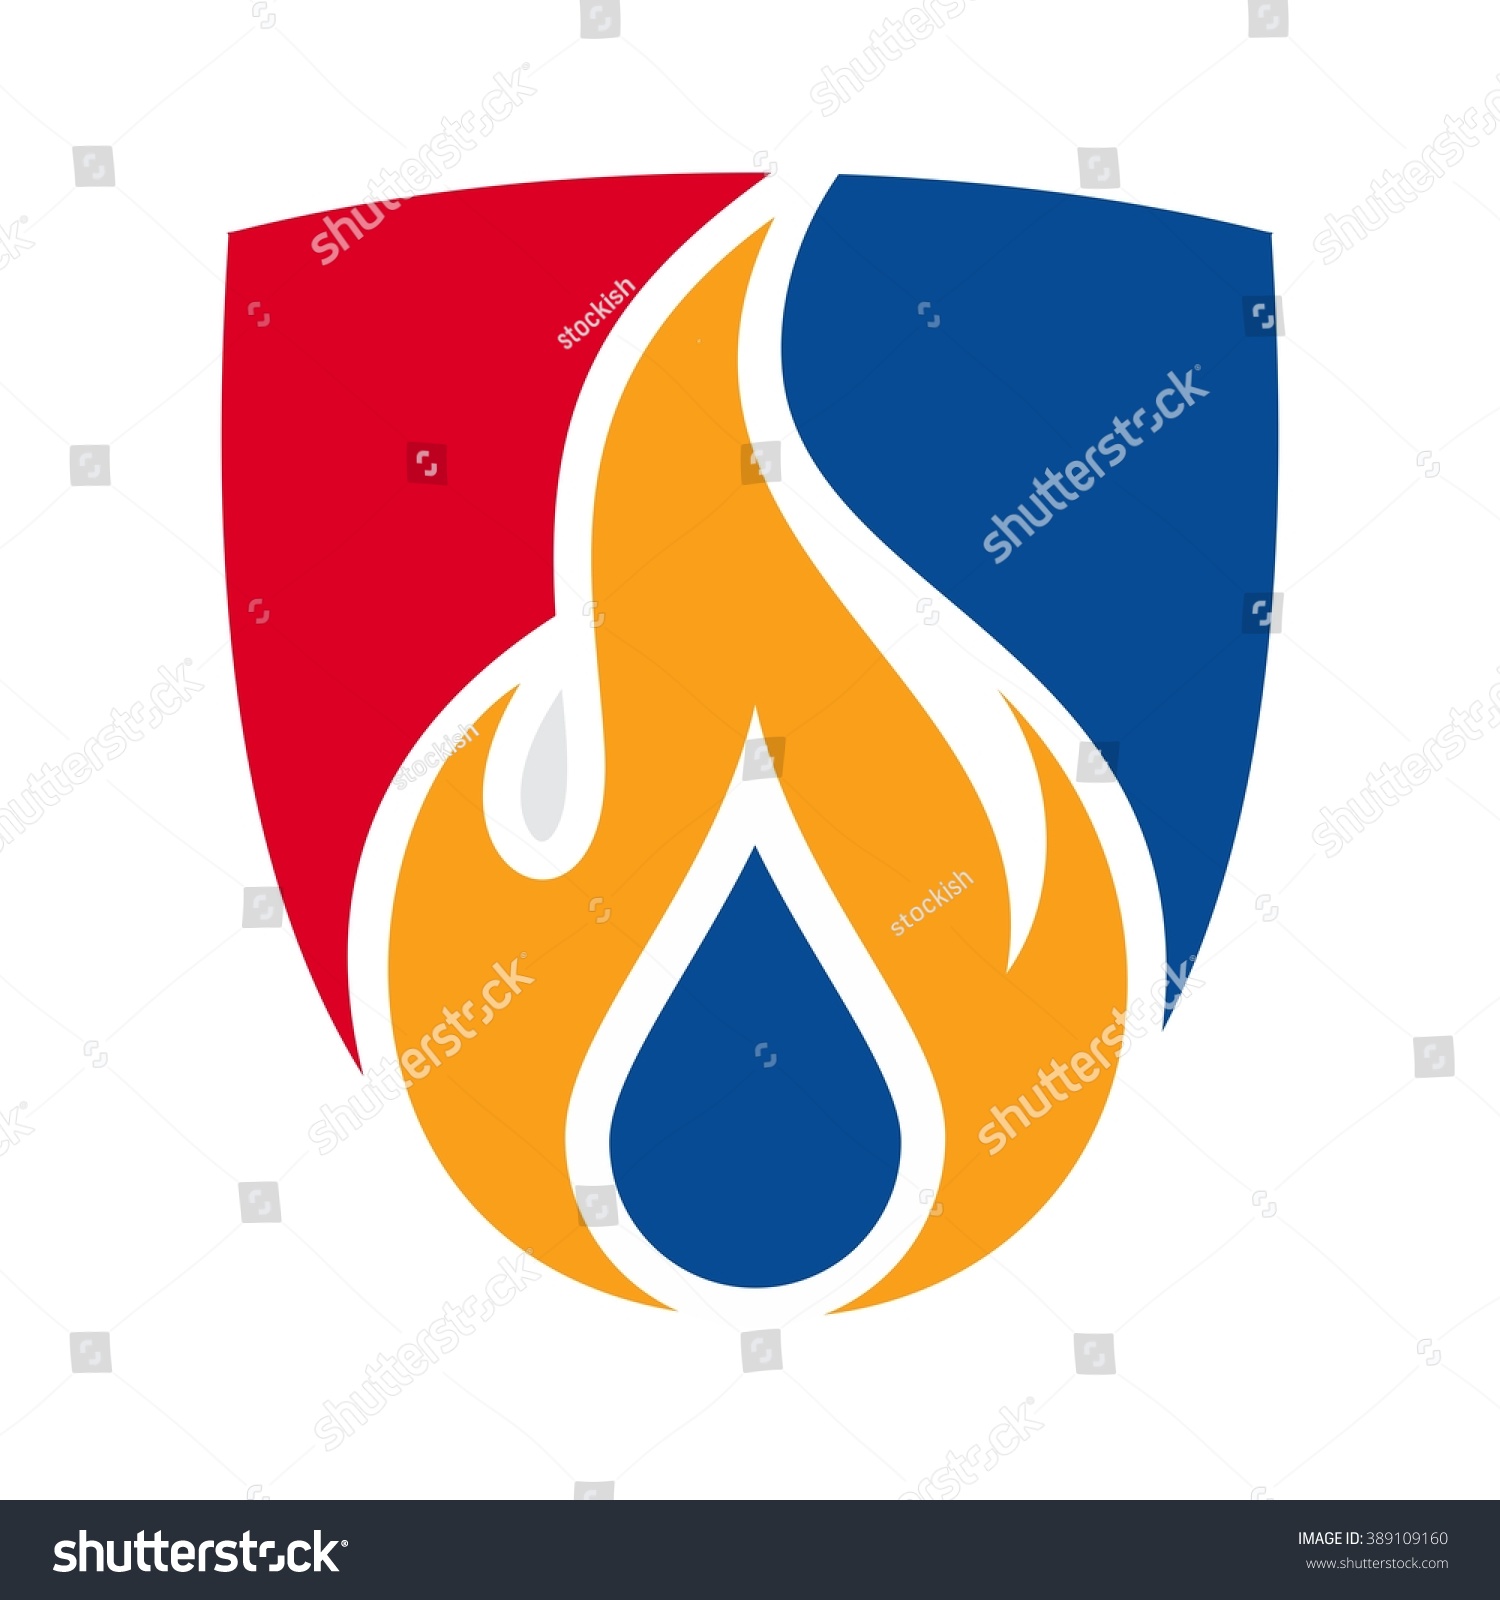 Water Fire Logo Vector Stock Vector 389109160 - Shutterstock